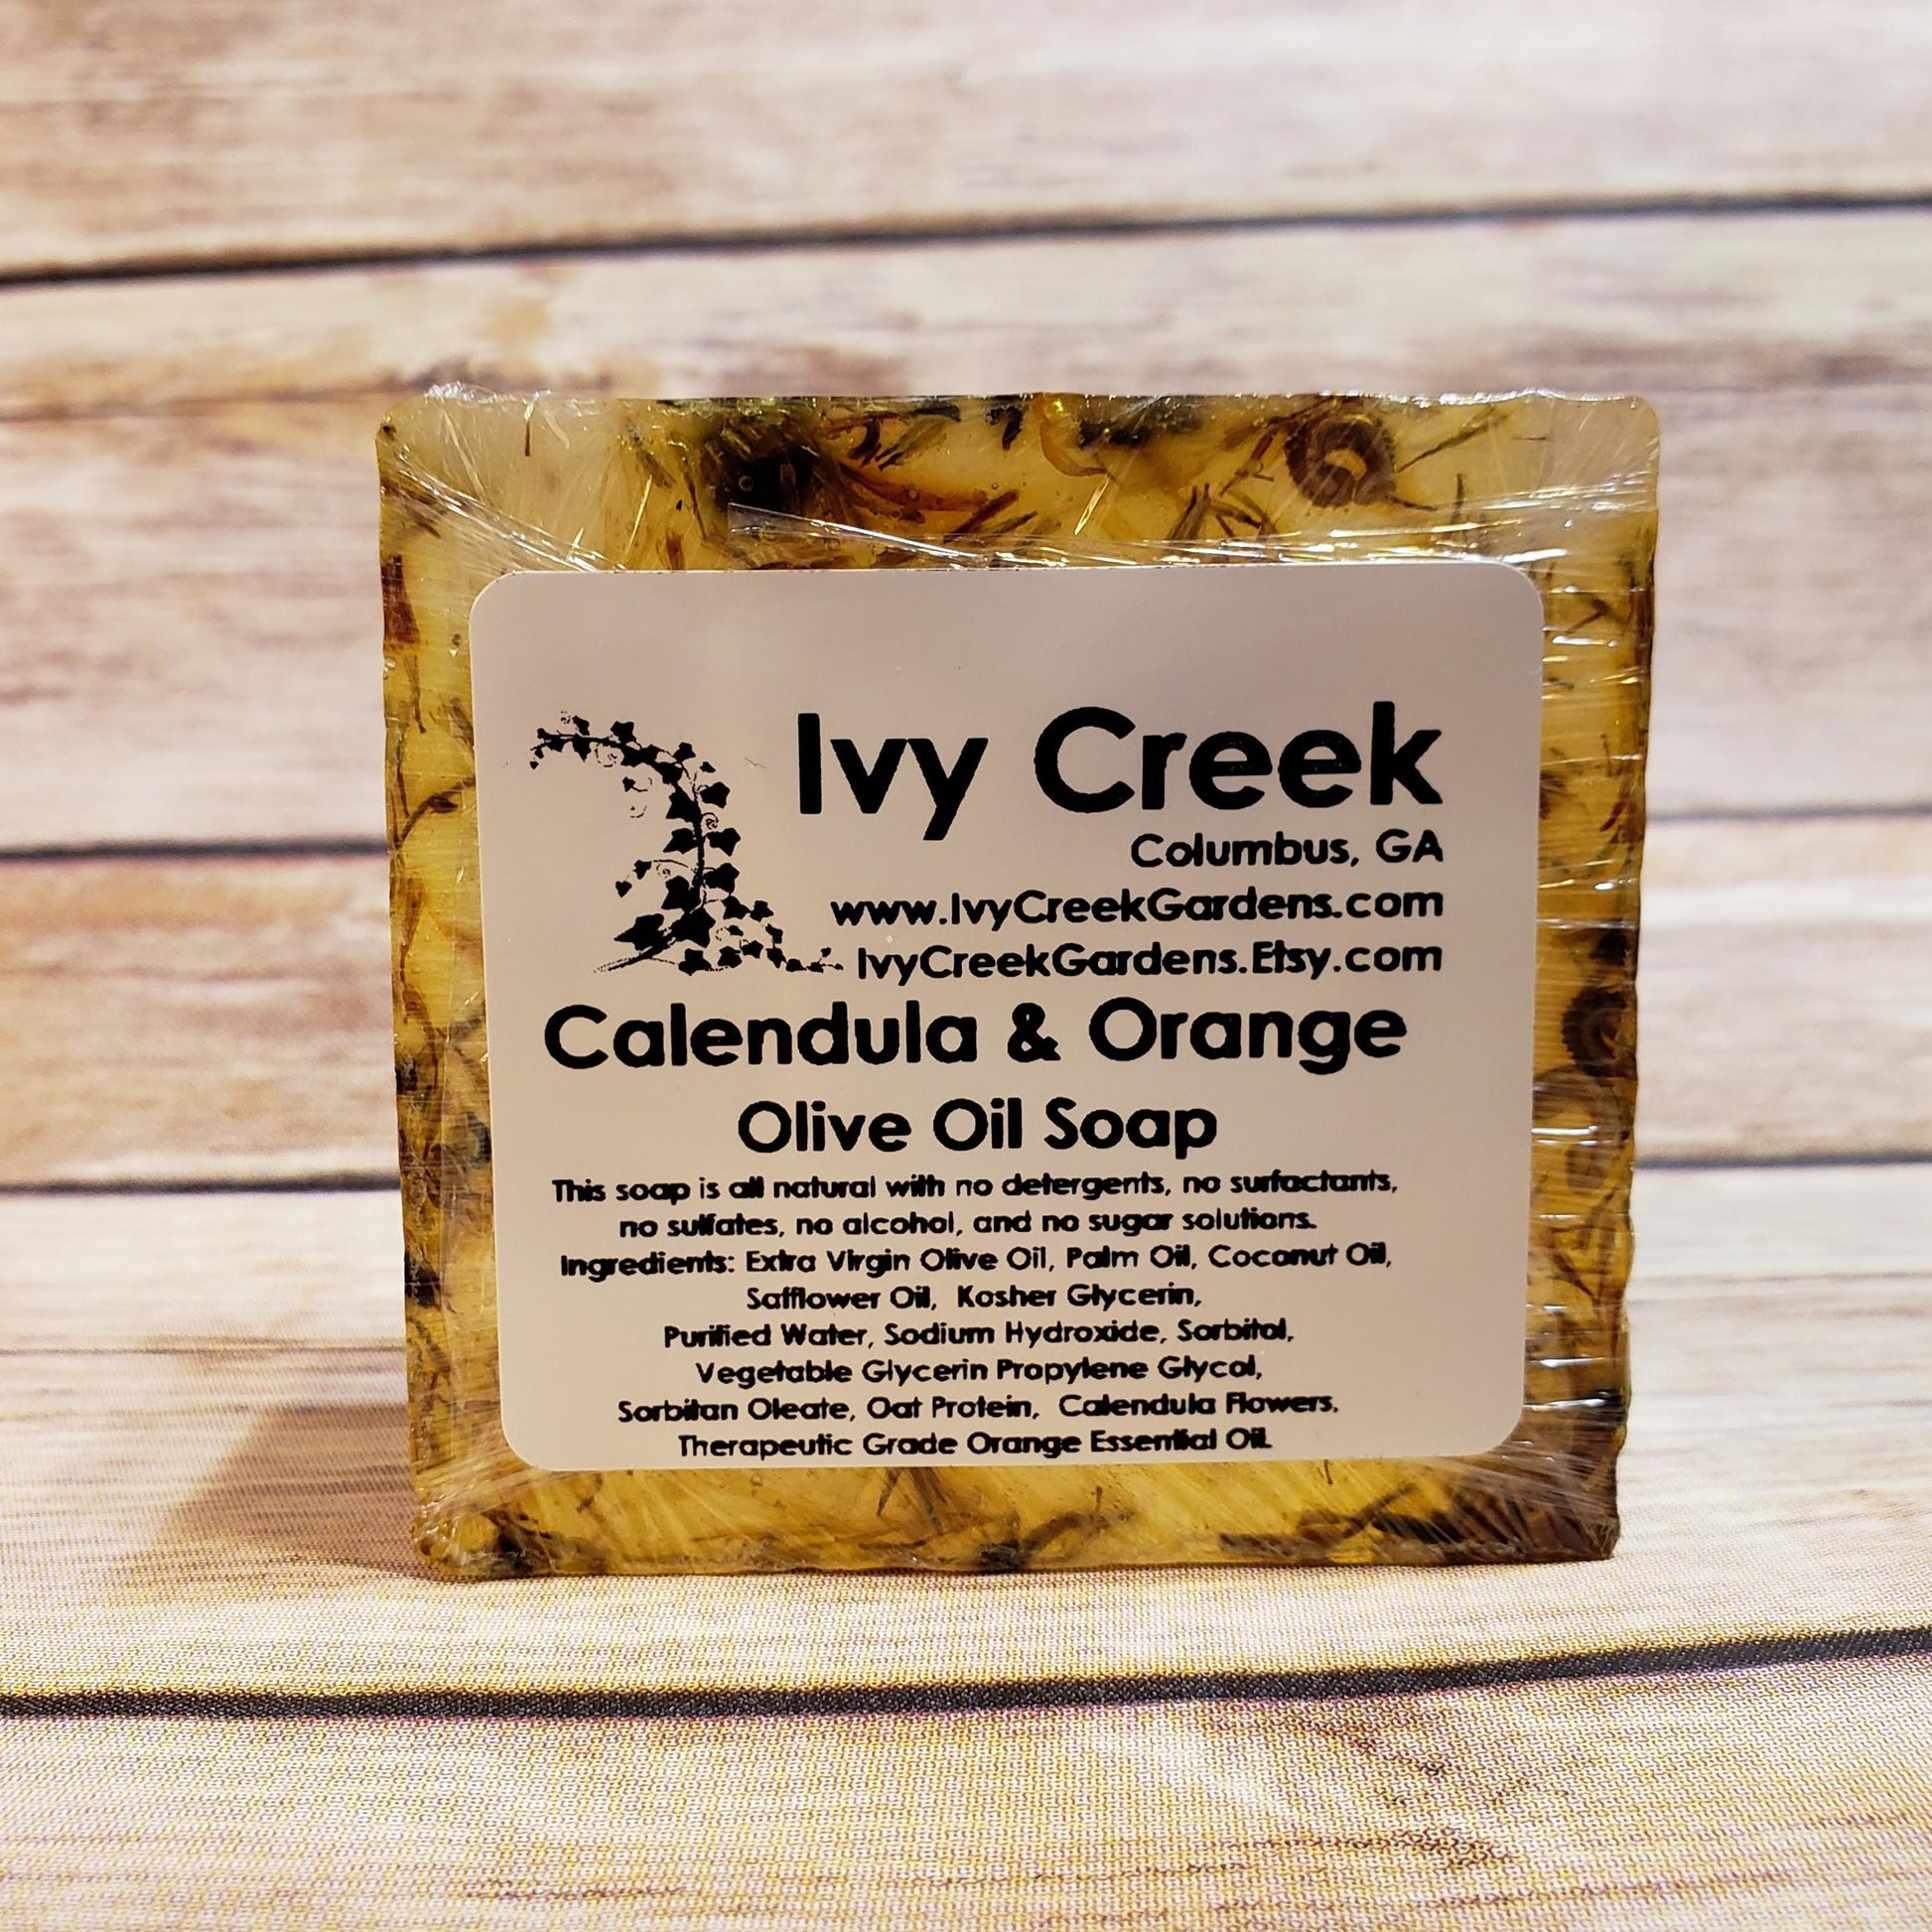 Ivy Creek Calendula & Orange Olive Oil Soap - Herbal, Moisturizing, Gentle, 5 oz